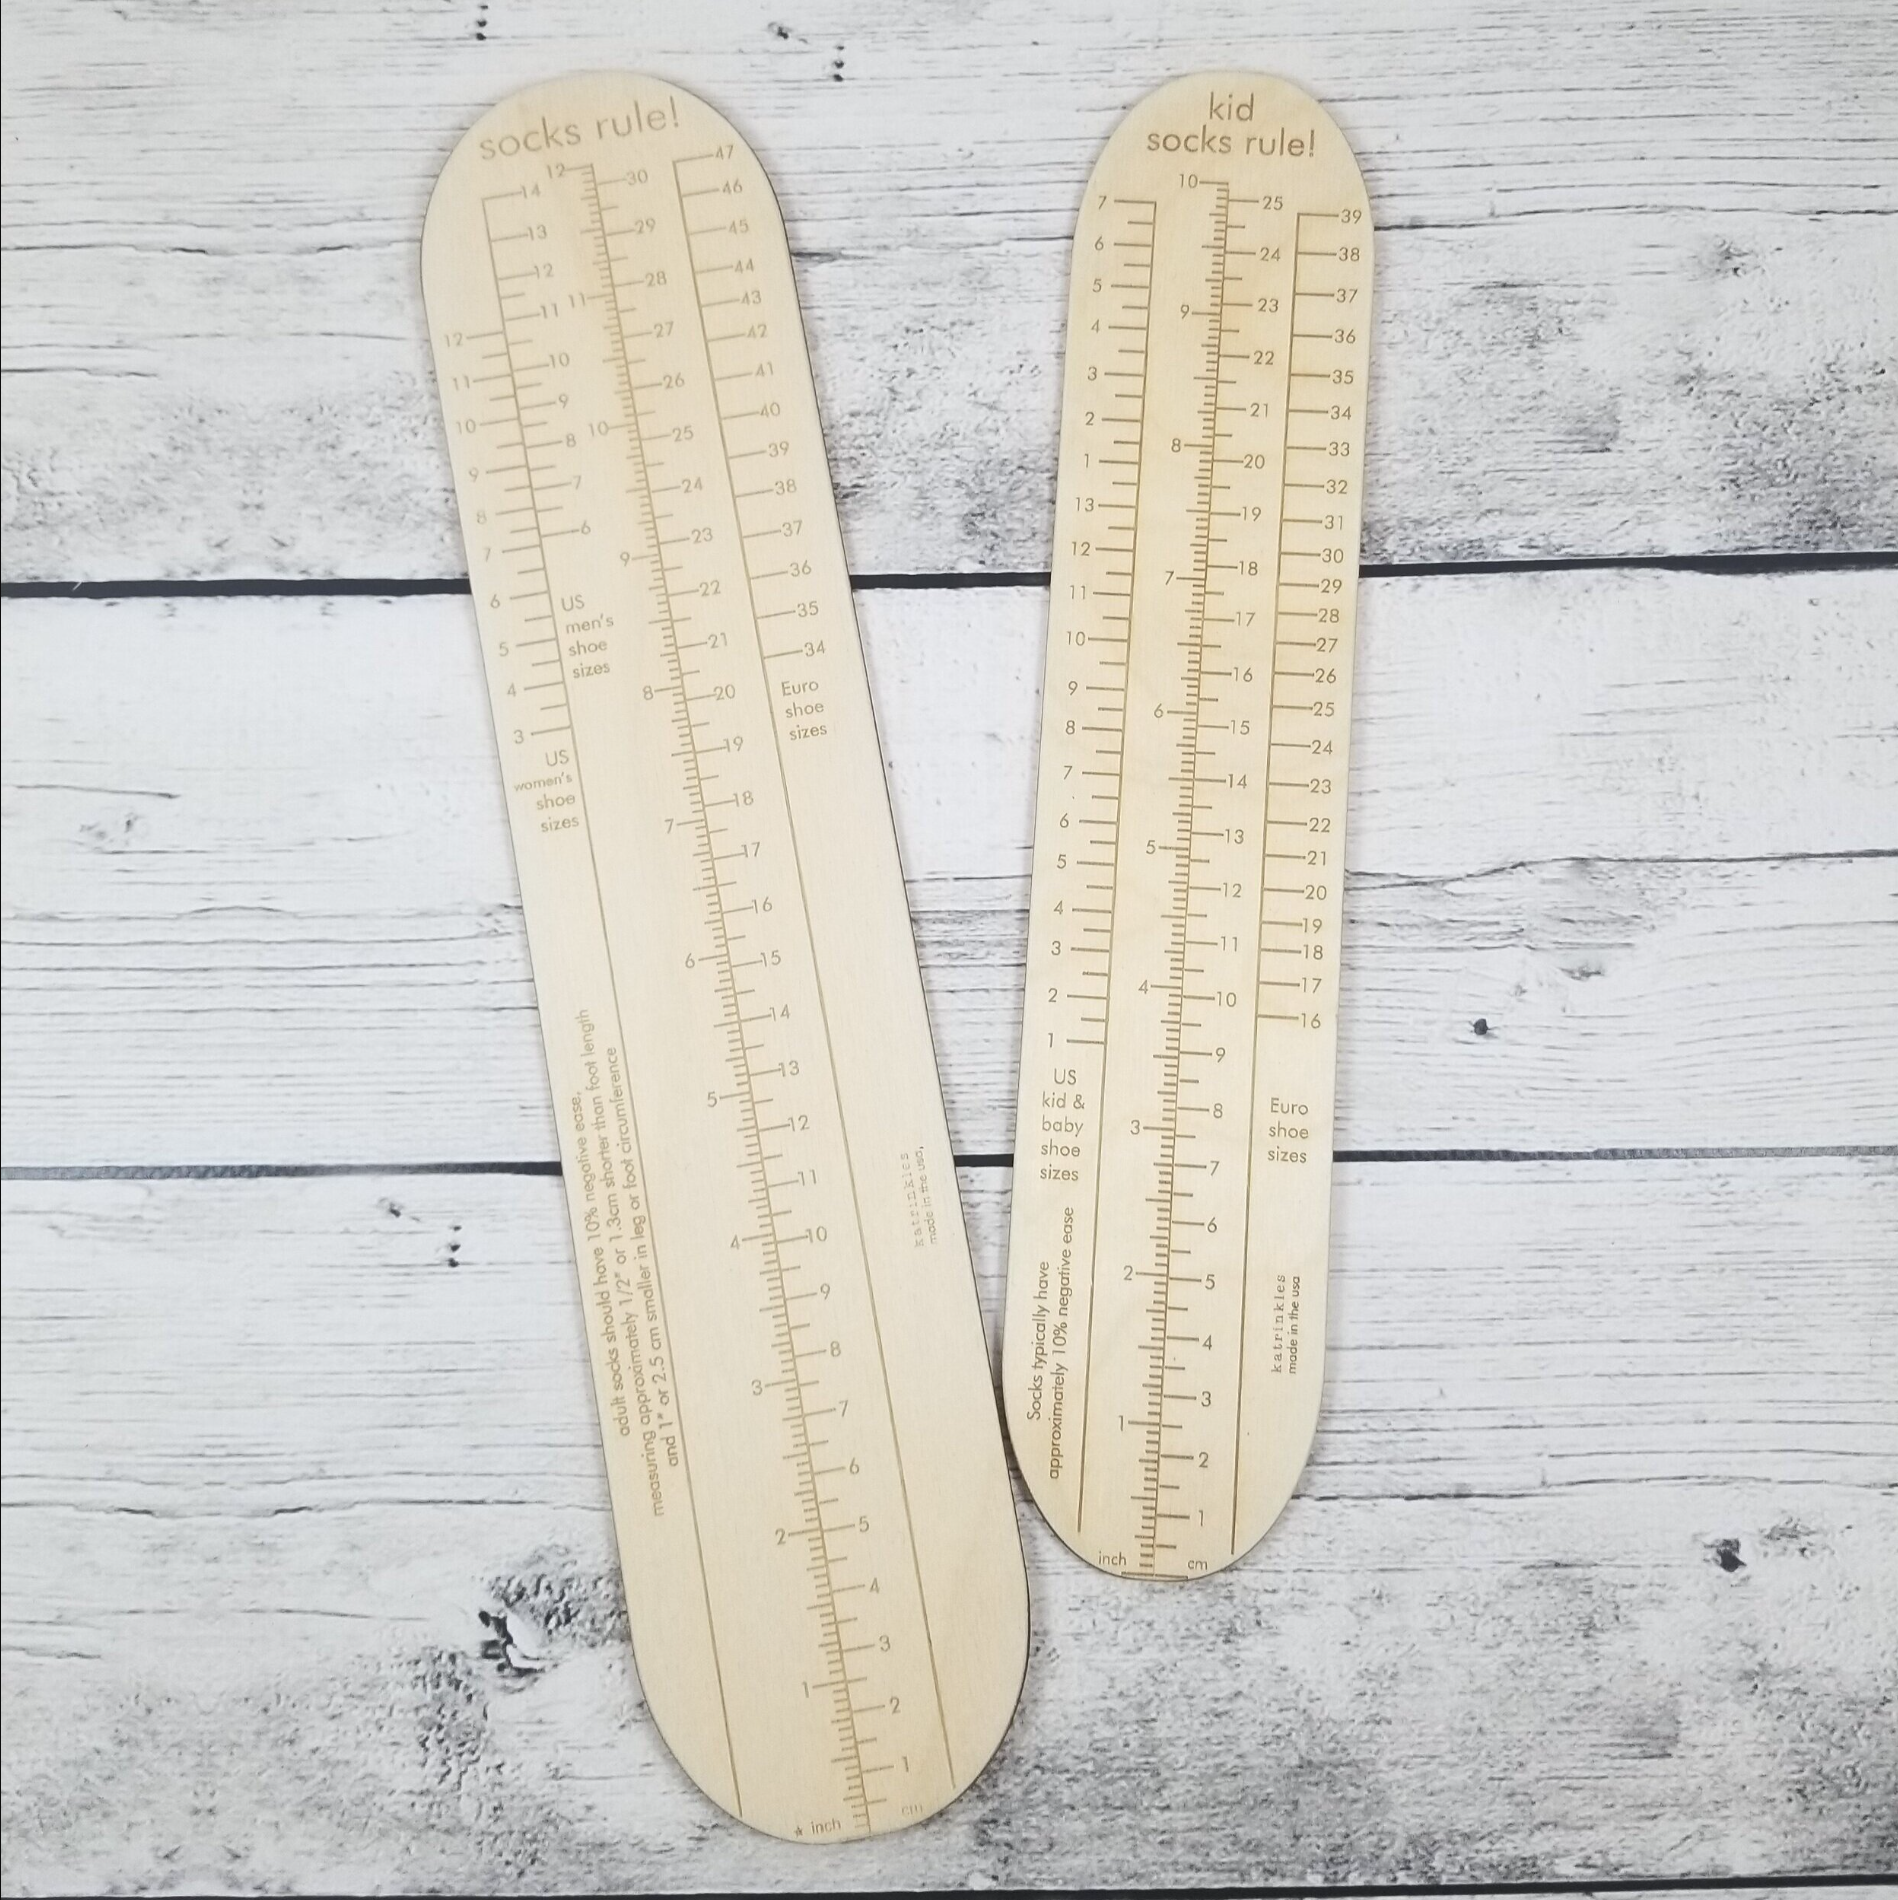 Katrinkles Socks Rule! - Ruler for Measuring Socks - Adult & Kid